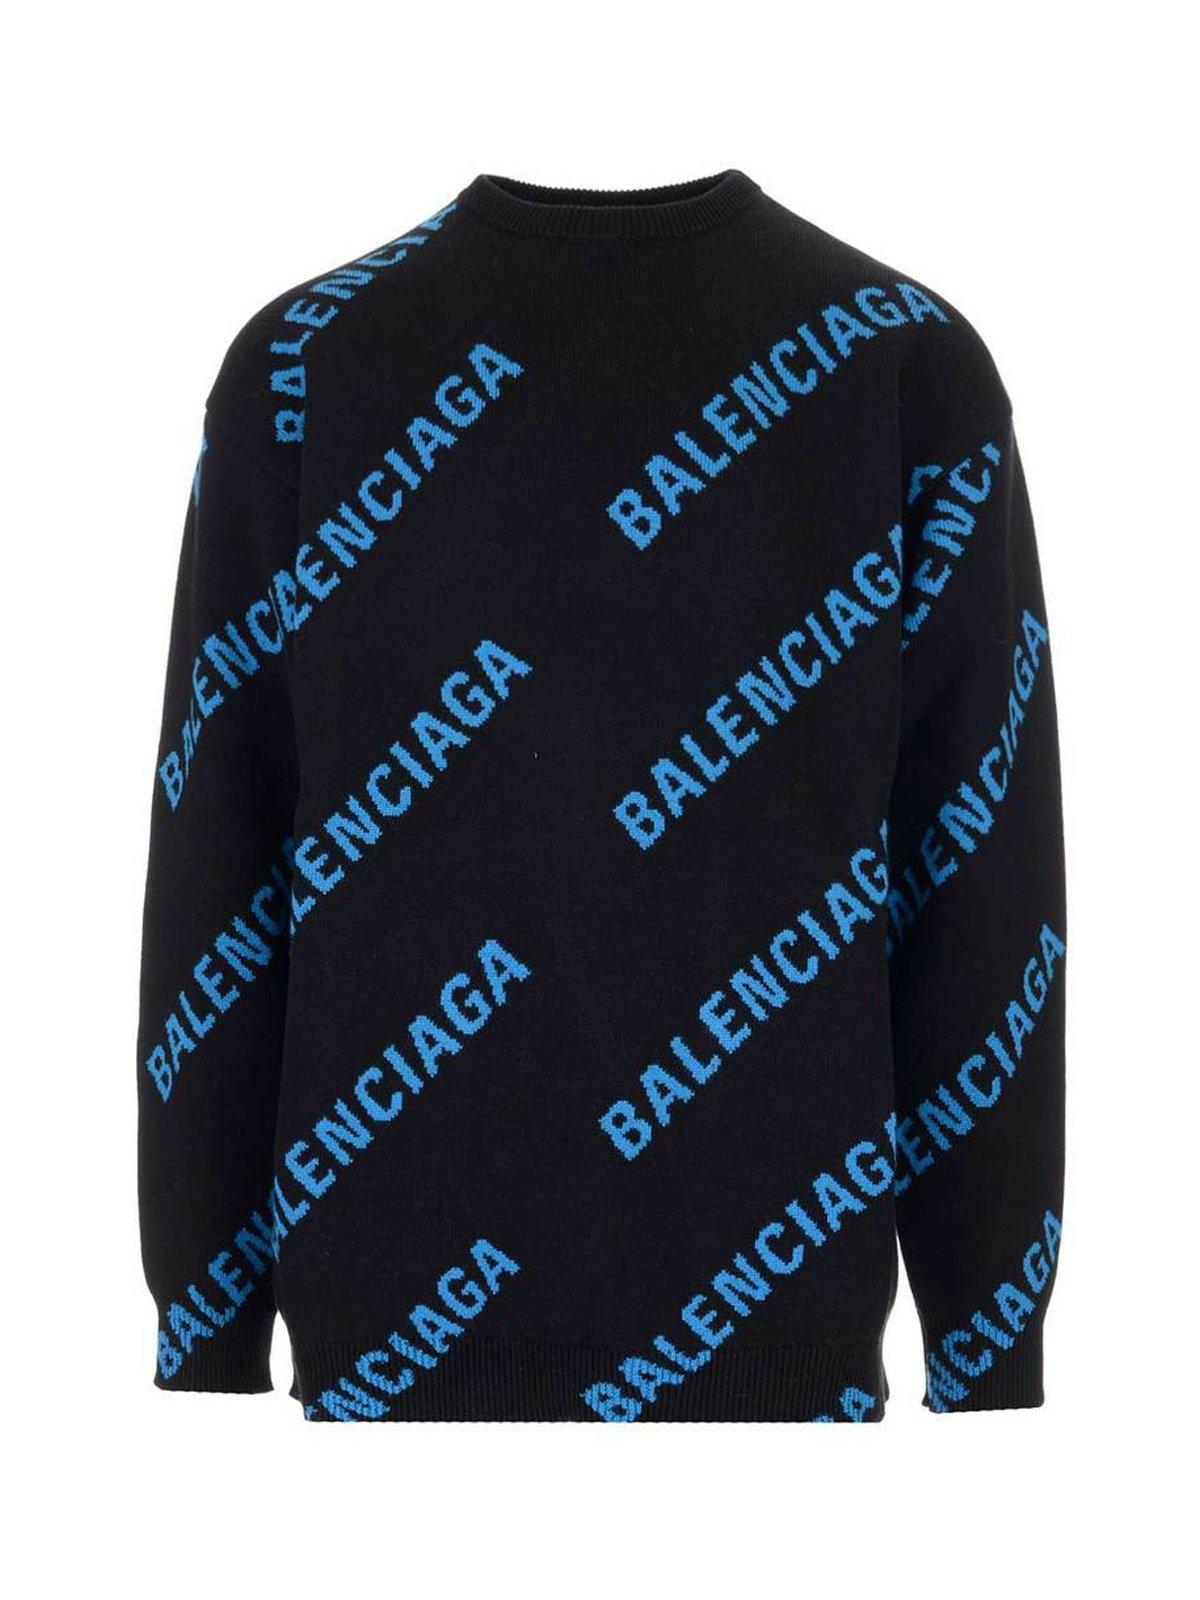 Balenciaga Logo Sweater in Blue for Men - Save 28% - Lyst